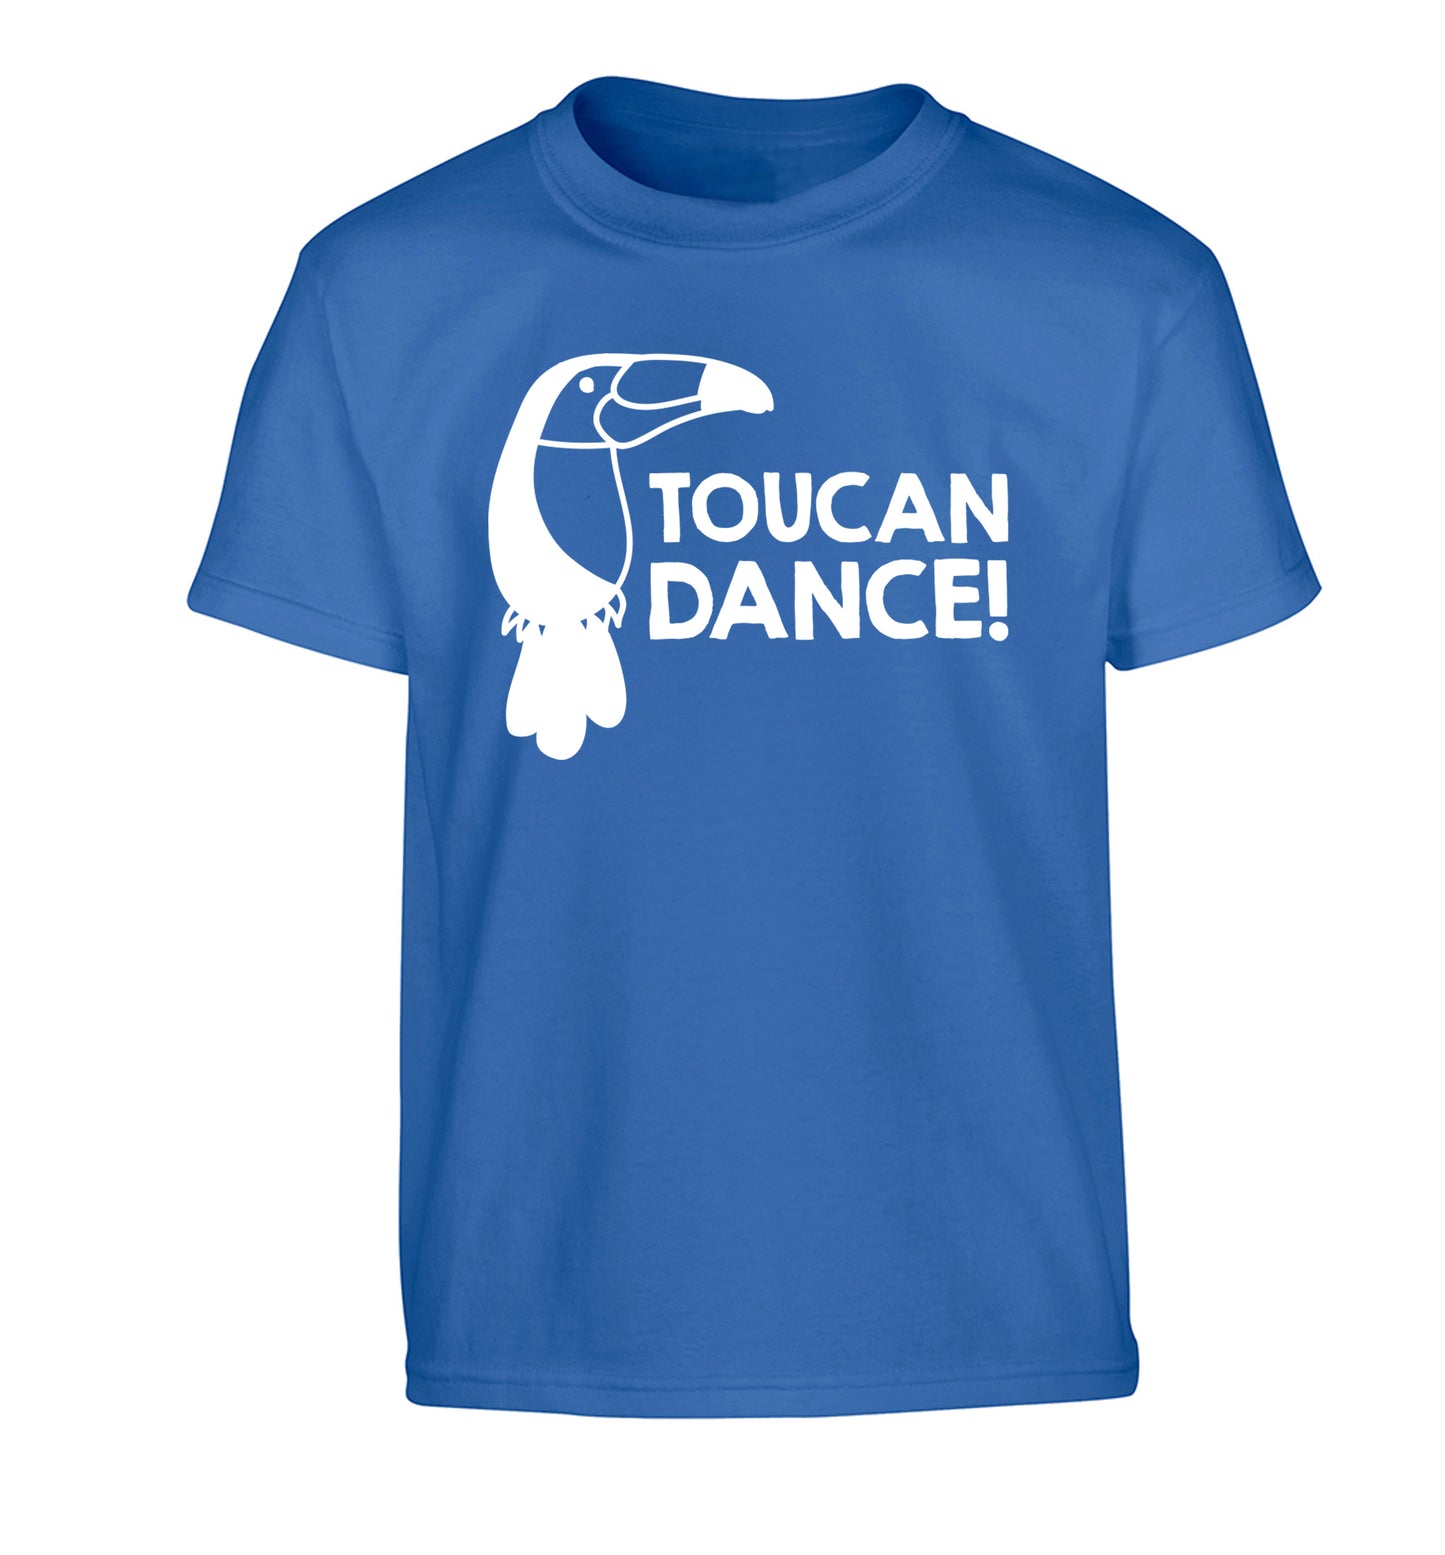 Toucan dance Children's blue Tshirt 12-13 Years